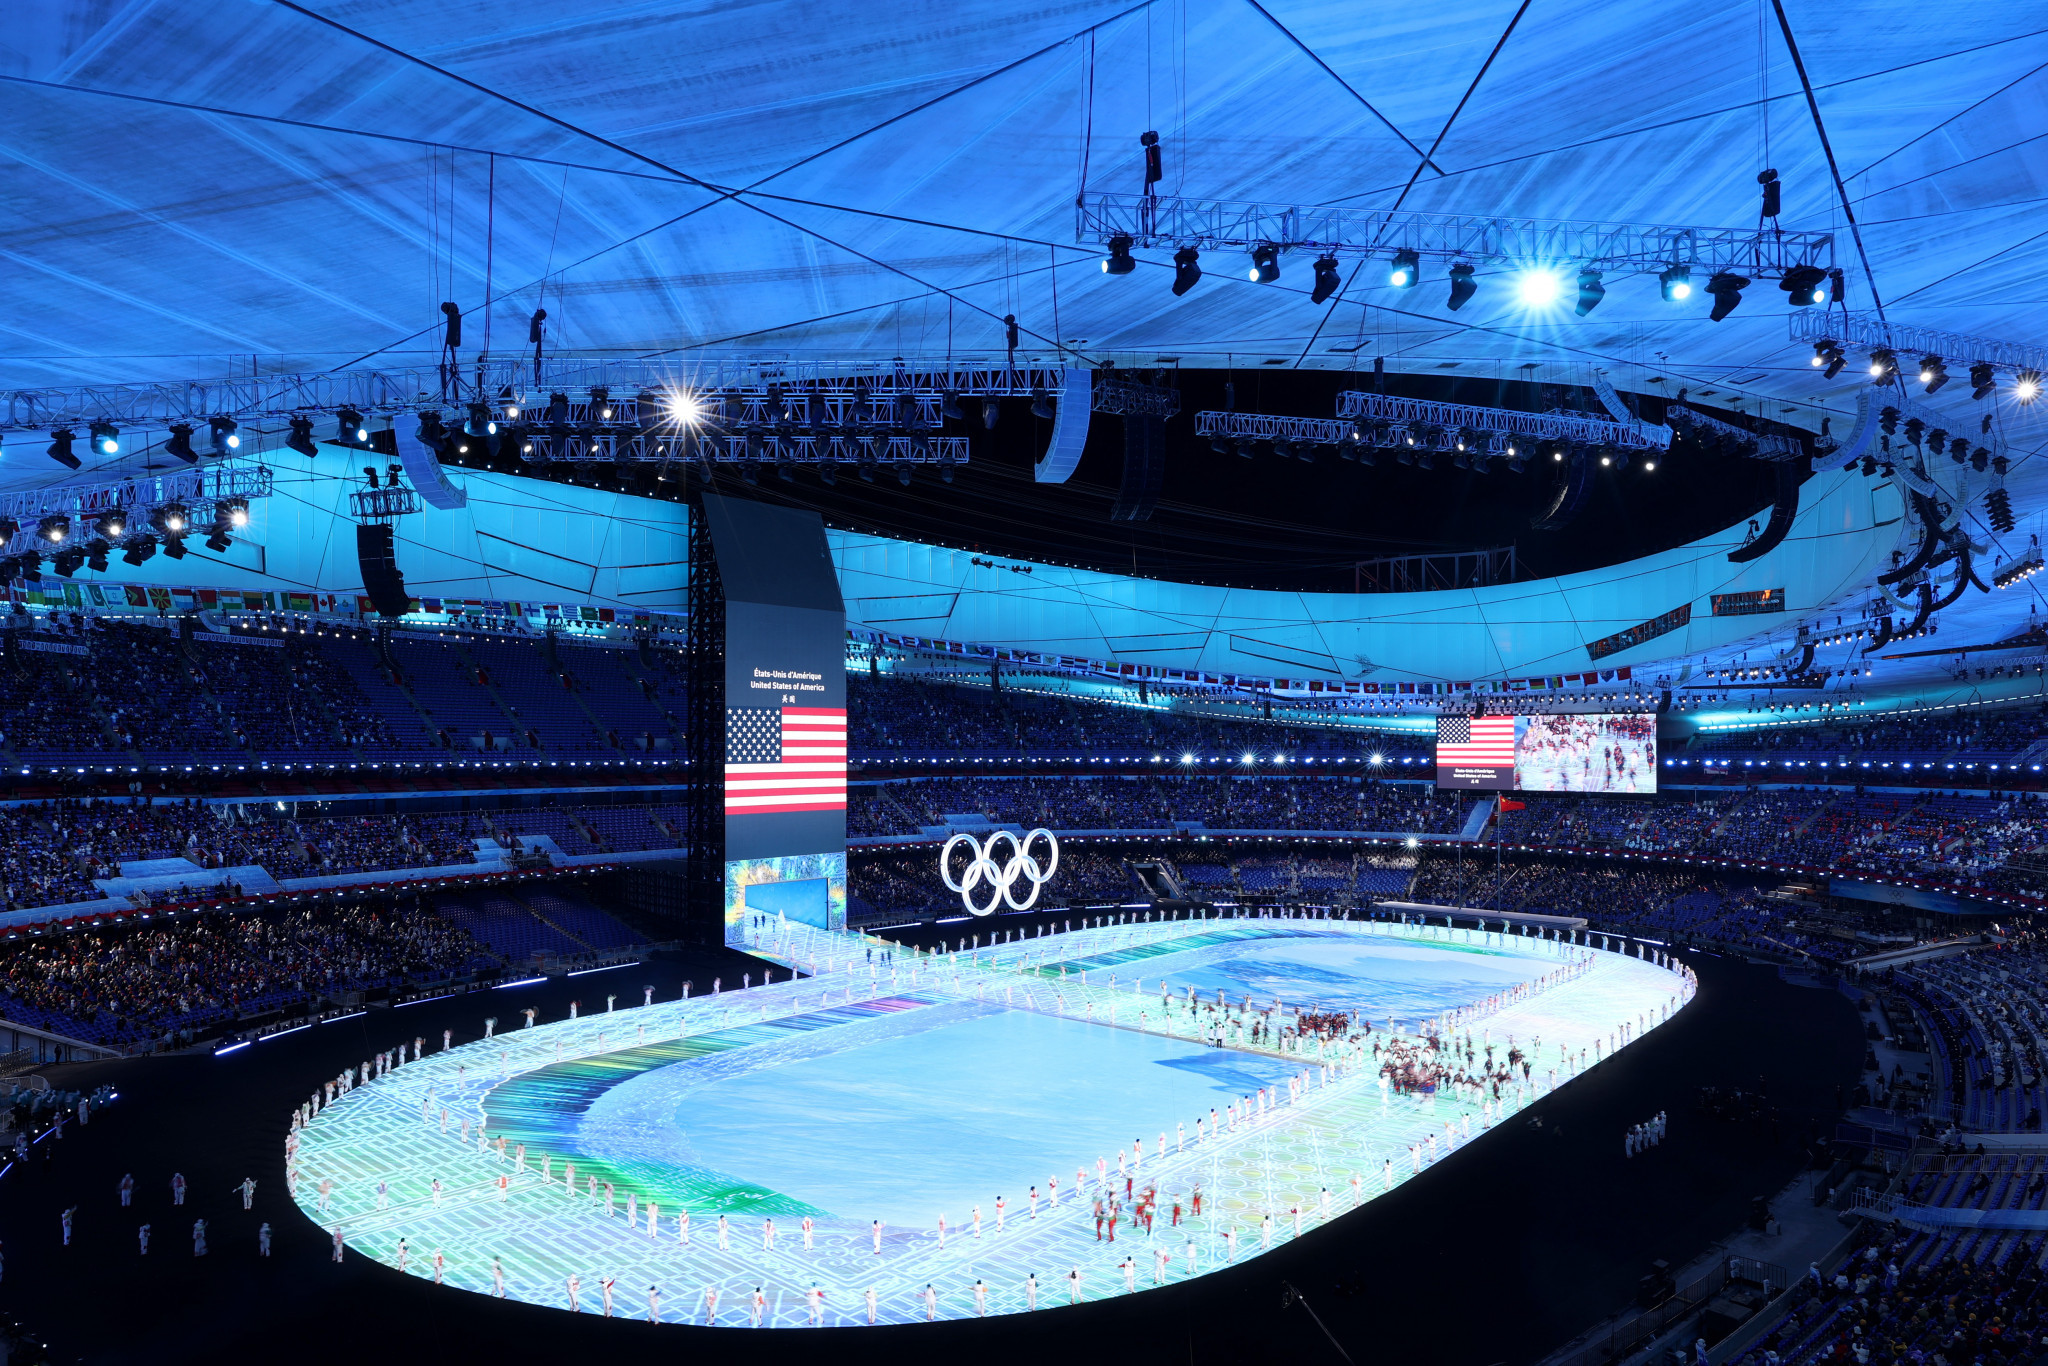 Beijing 2022 Winter Olympic Games torch lit inside snowflake Cauldron